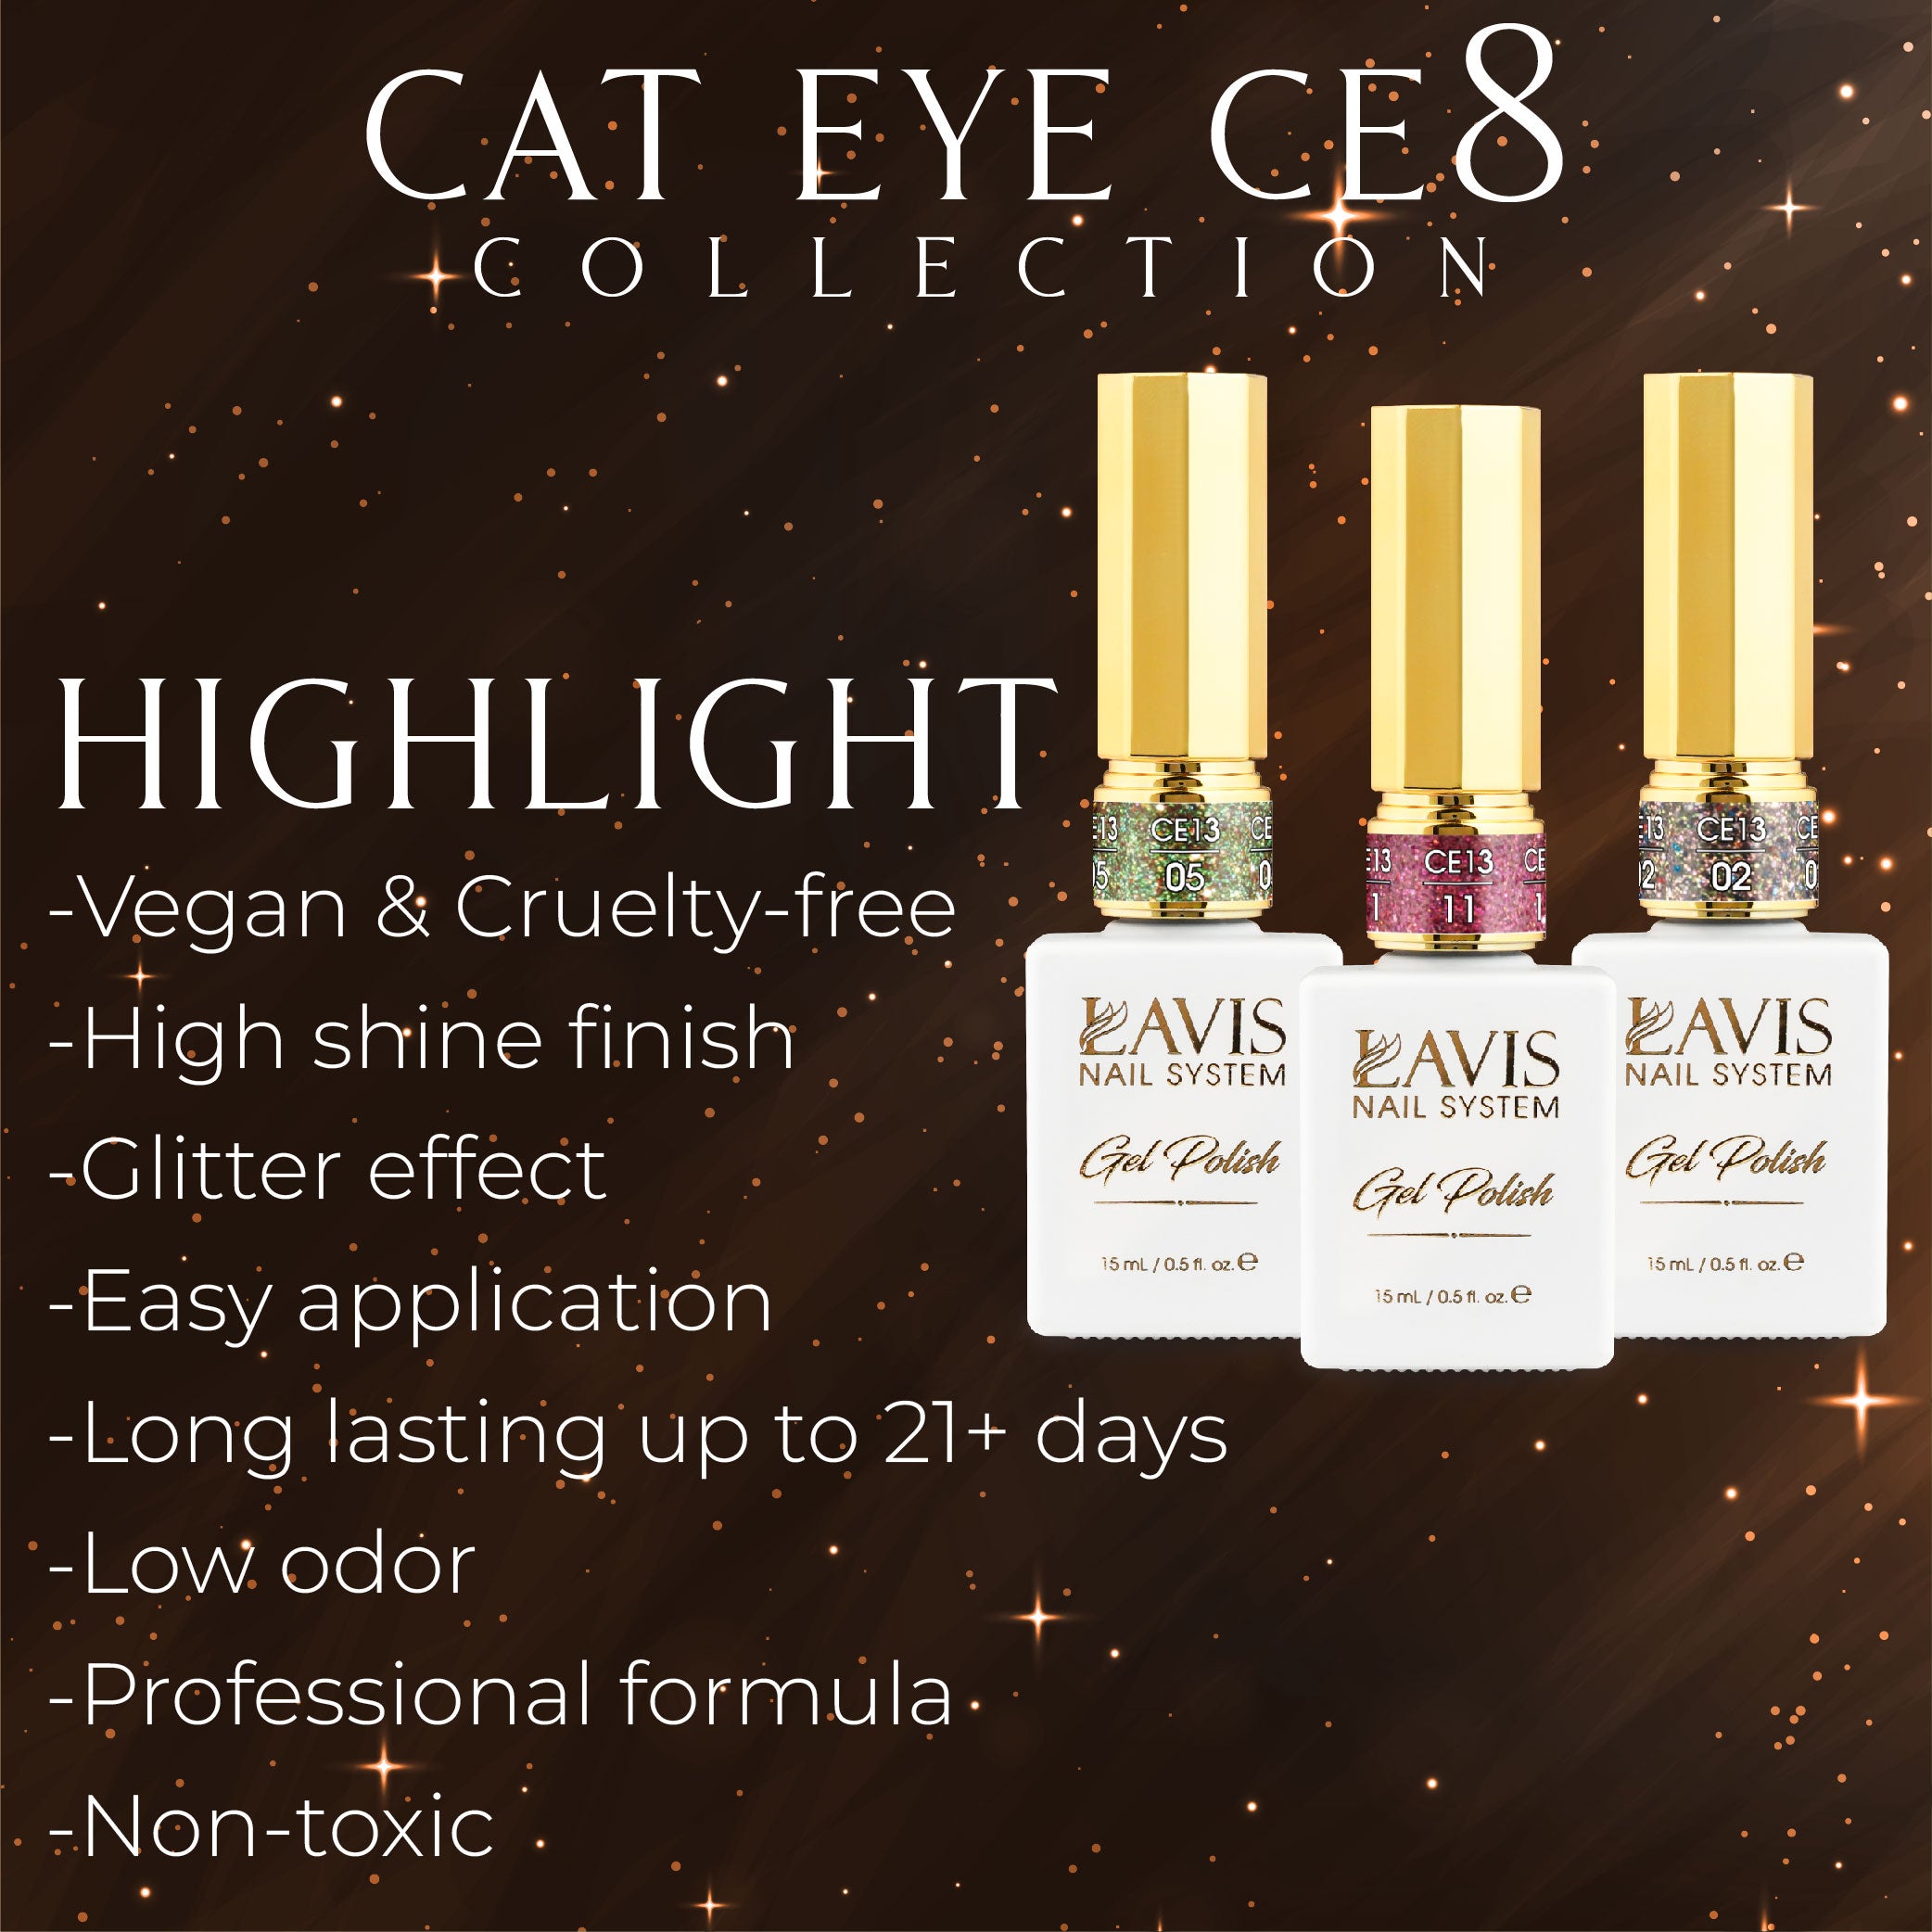 LAVIS Cat Eyes CE8 - 06 - Gel Polish 0.5 oz - Lavis Hidden Treasures Collection